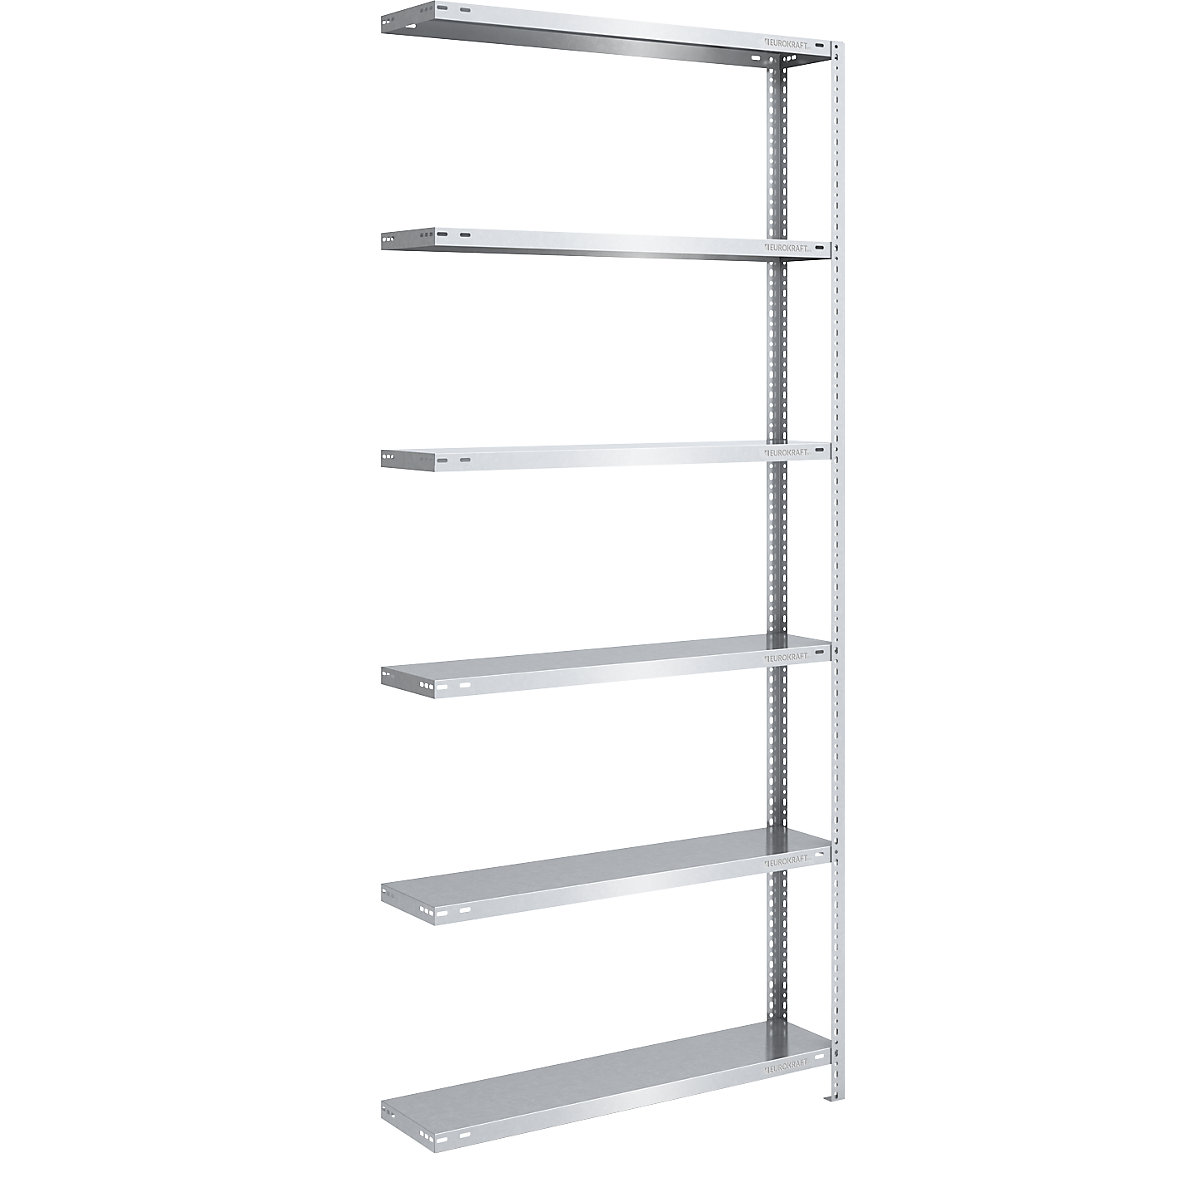 Bolt-together shelf unit, light duty, zinc plated – eurokraft pro, shelf unit height 2500 mm, shelf width 1000 mm, depth 300 mm, extension shelf unit-10